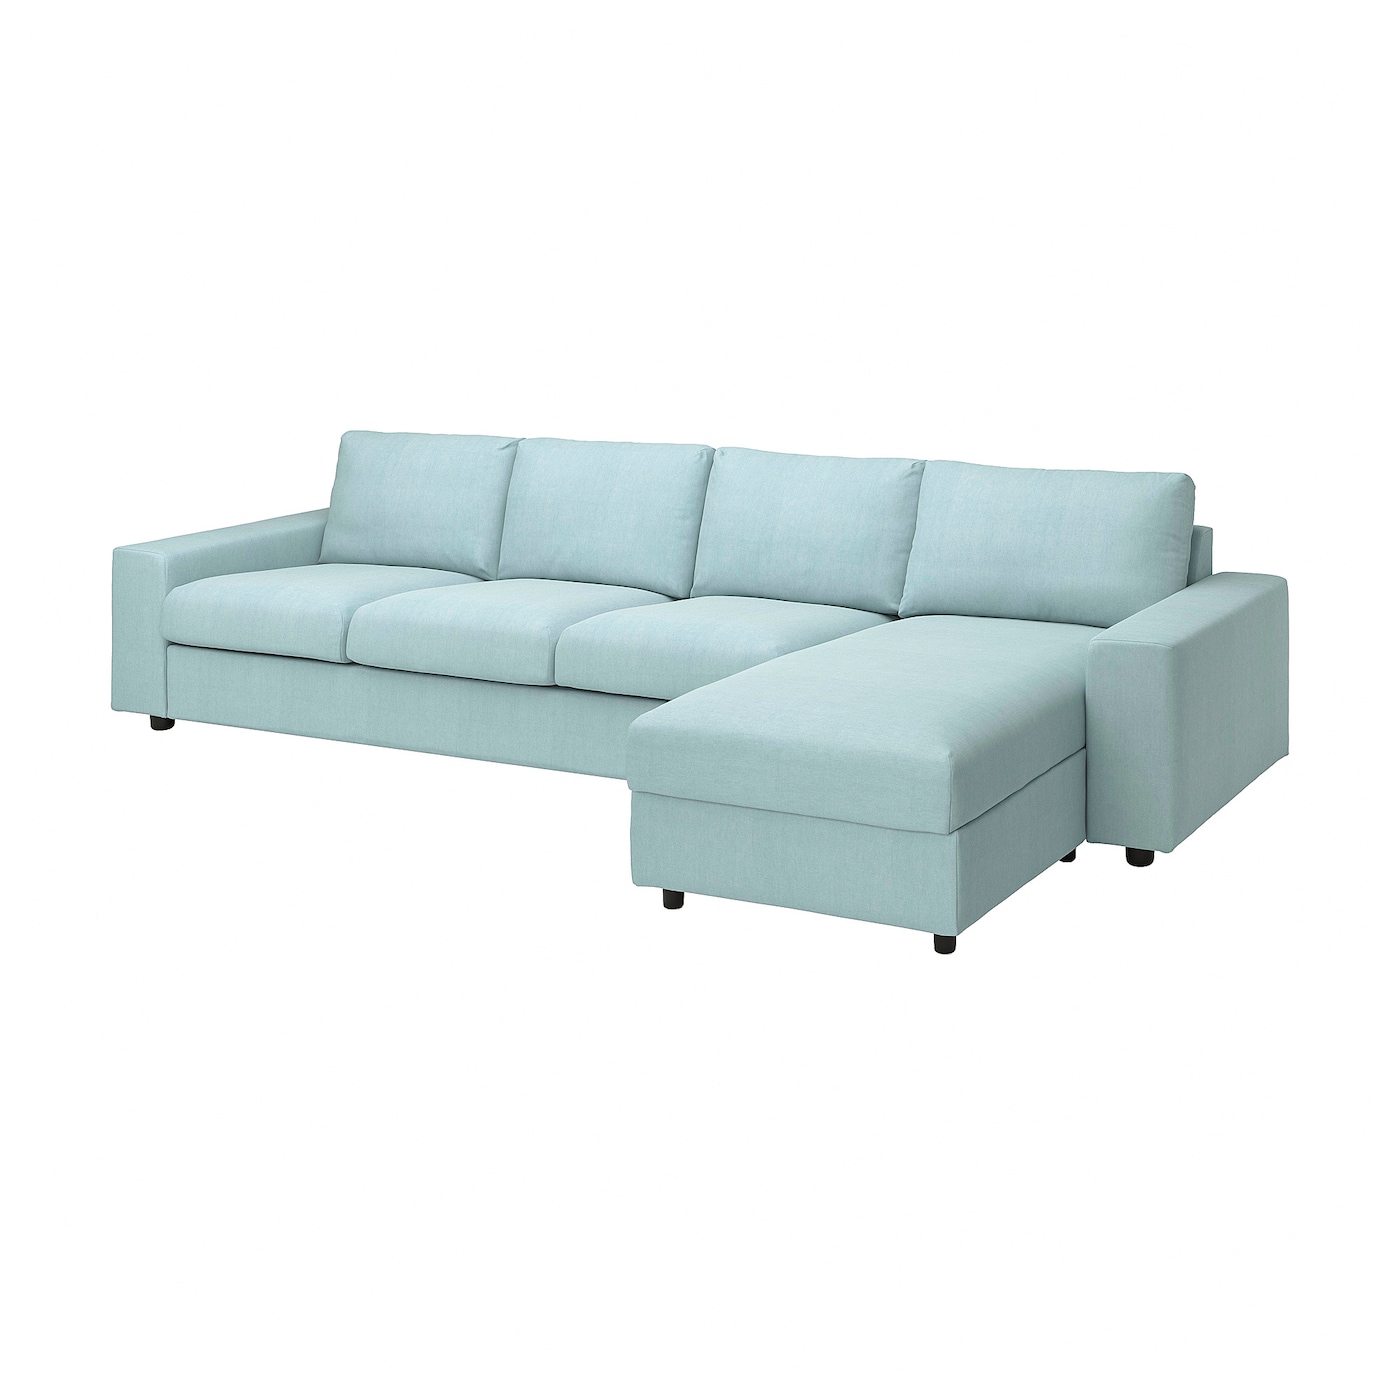 ВИМЛЕ 4-местный диван + диван, с широкими подлокотниками/Саксемара светло-синий VIMLE IKEA